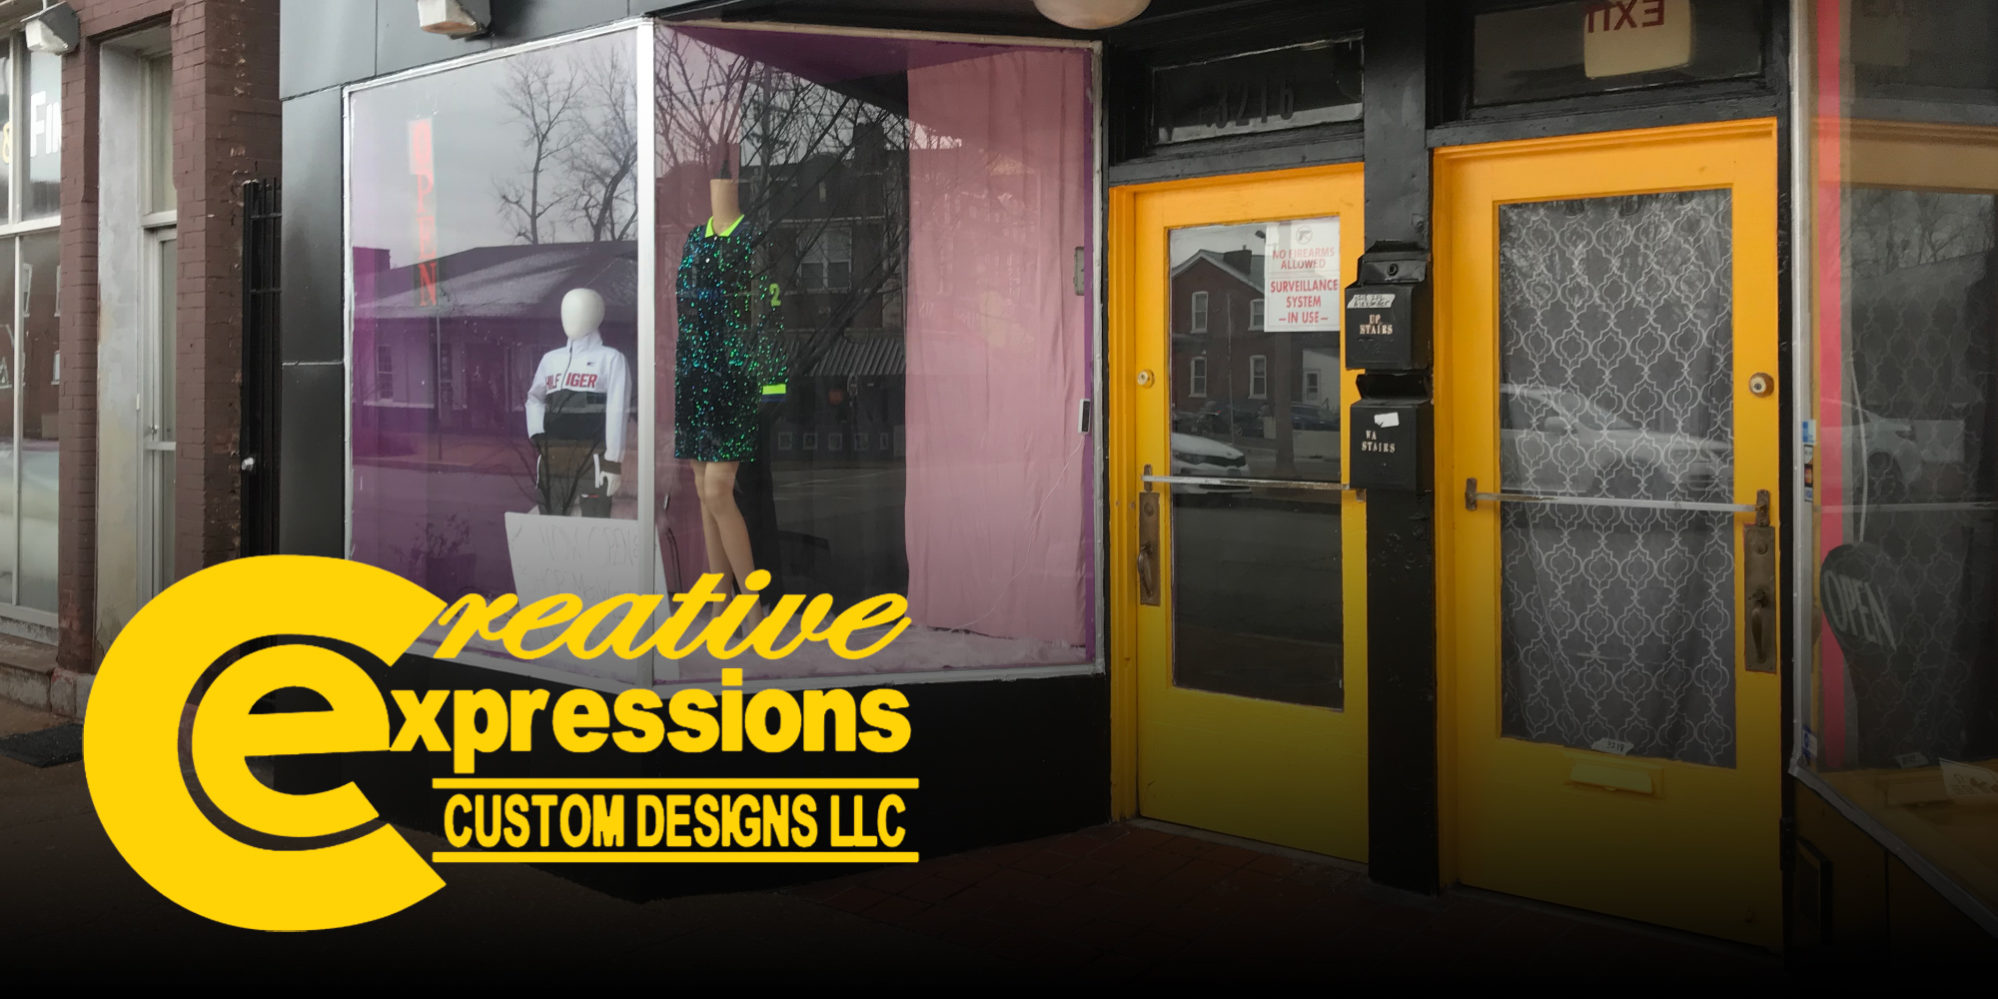 Creative Expressions Custom Designs at 3218 Meramec Street in Dutchtown, St. Louis, MO.